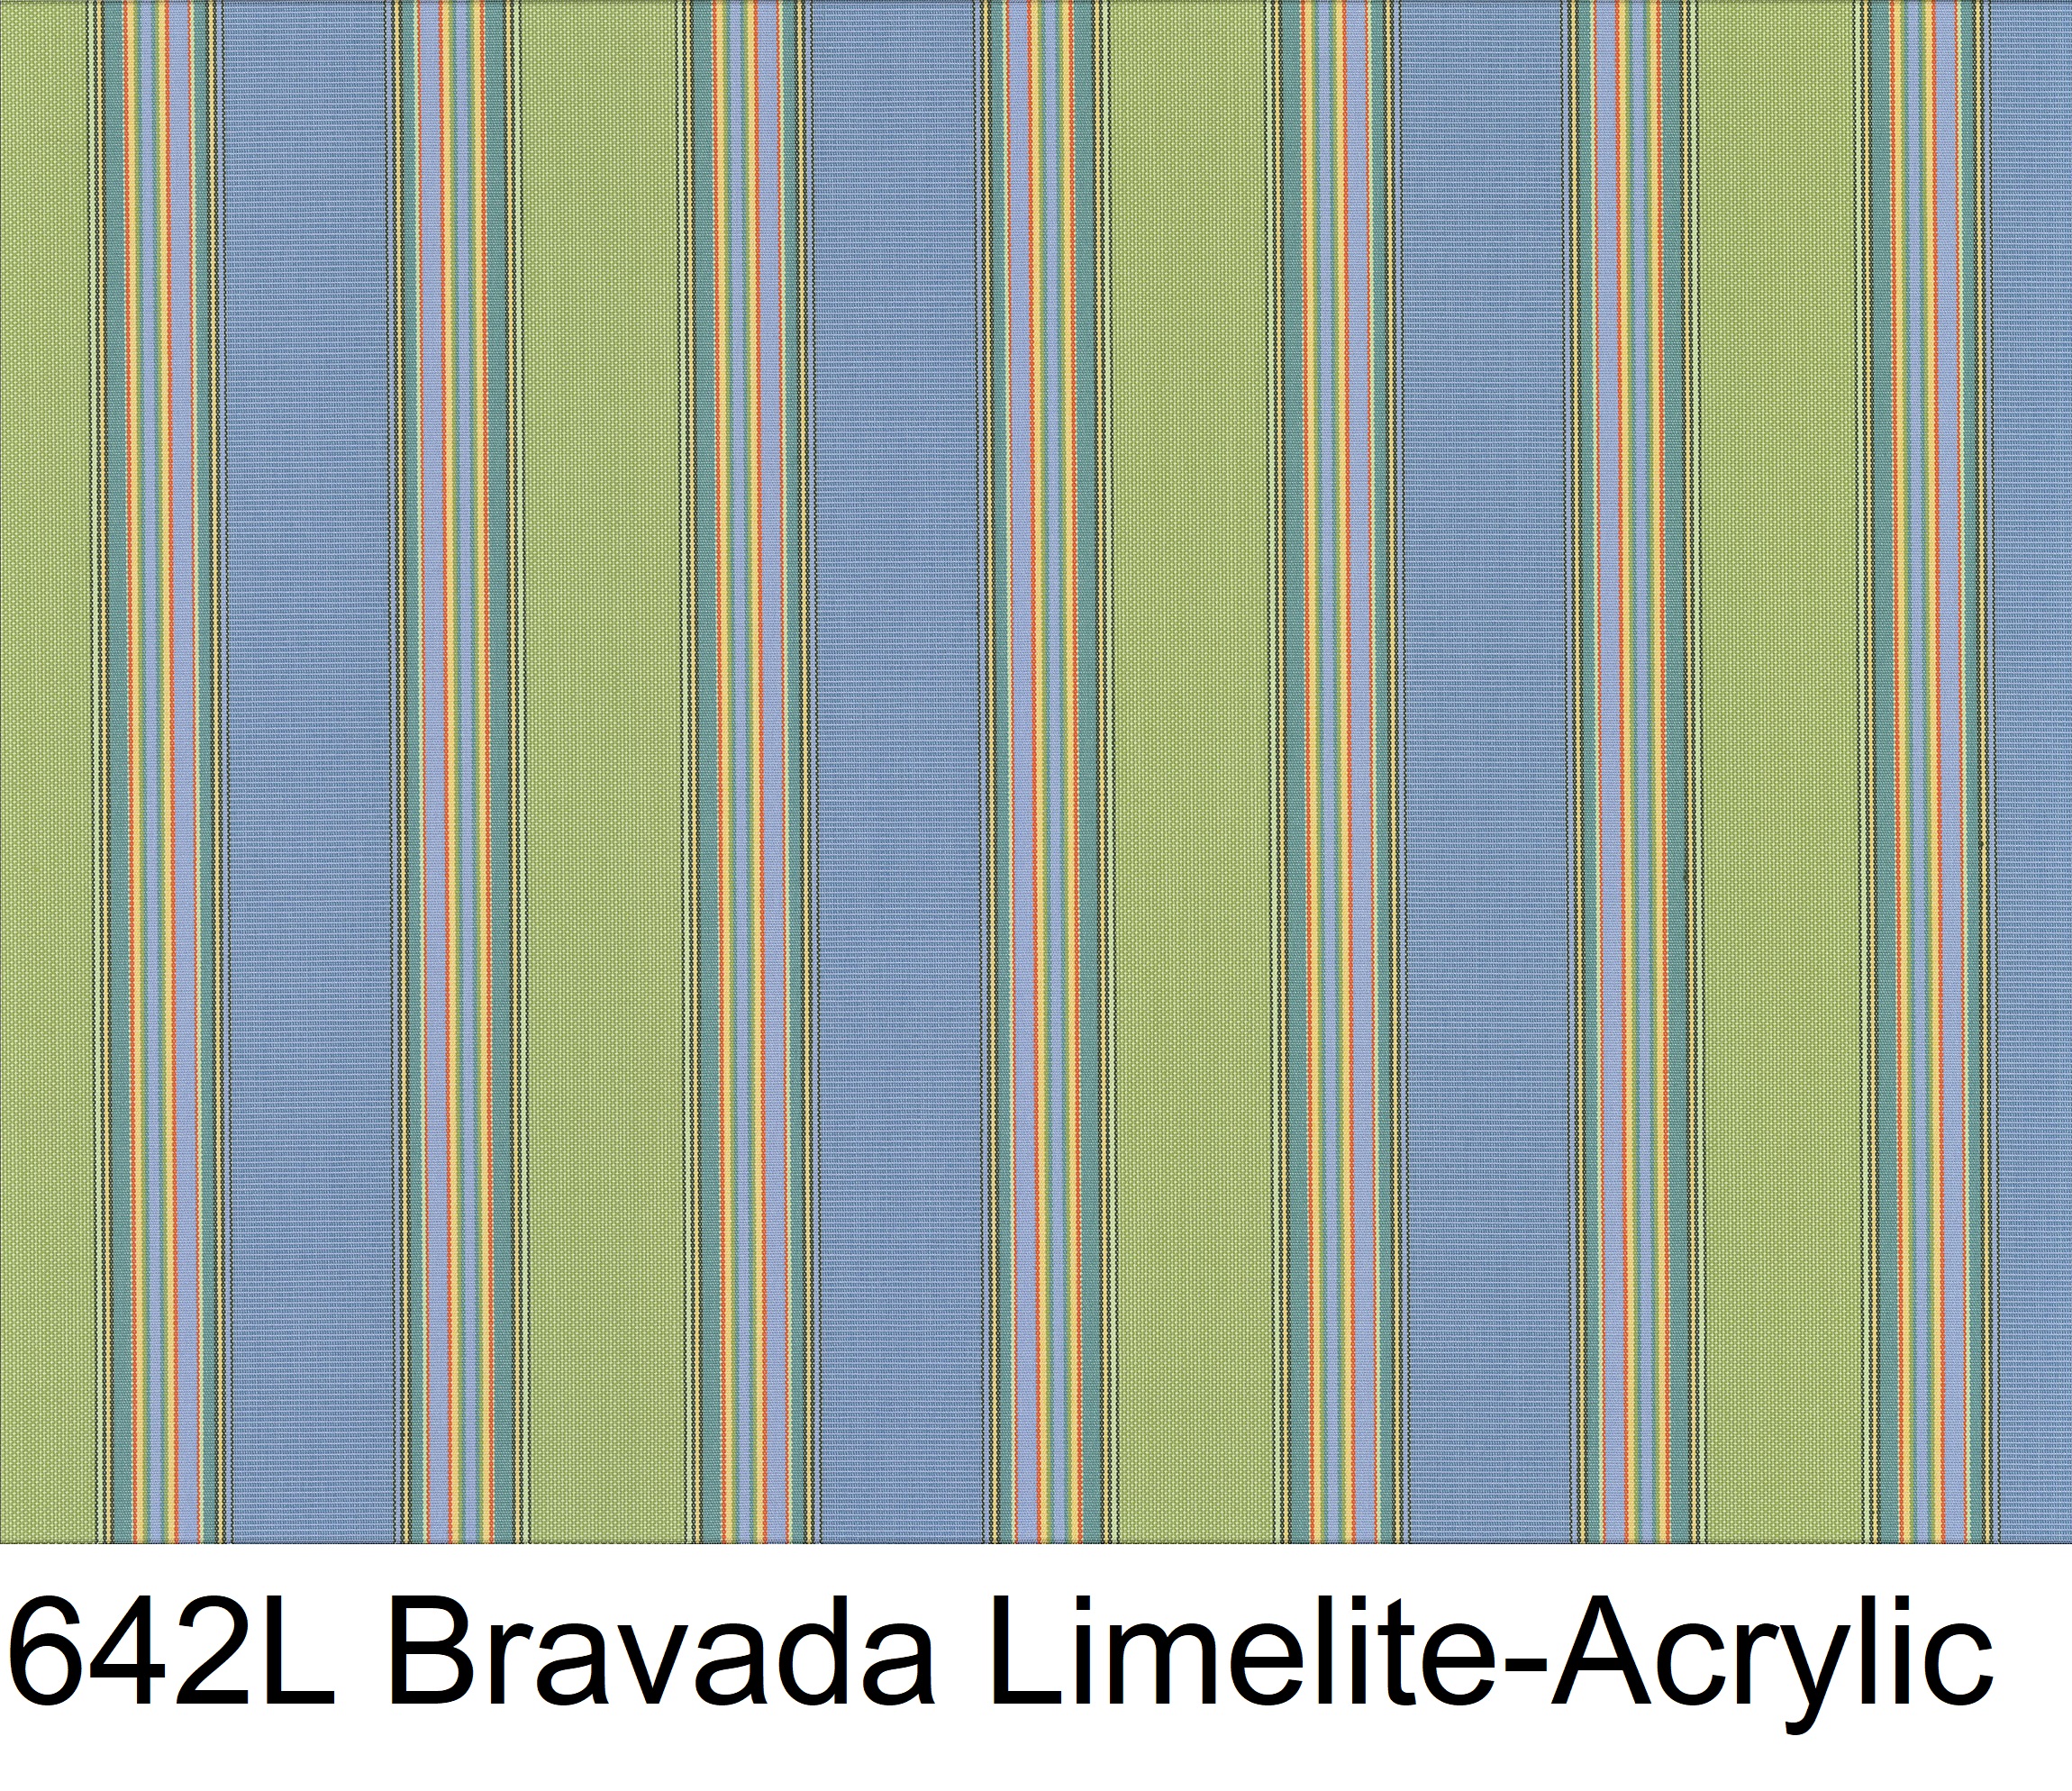 642L Bravada Limelite-Acrylic